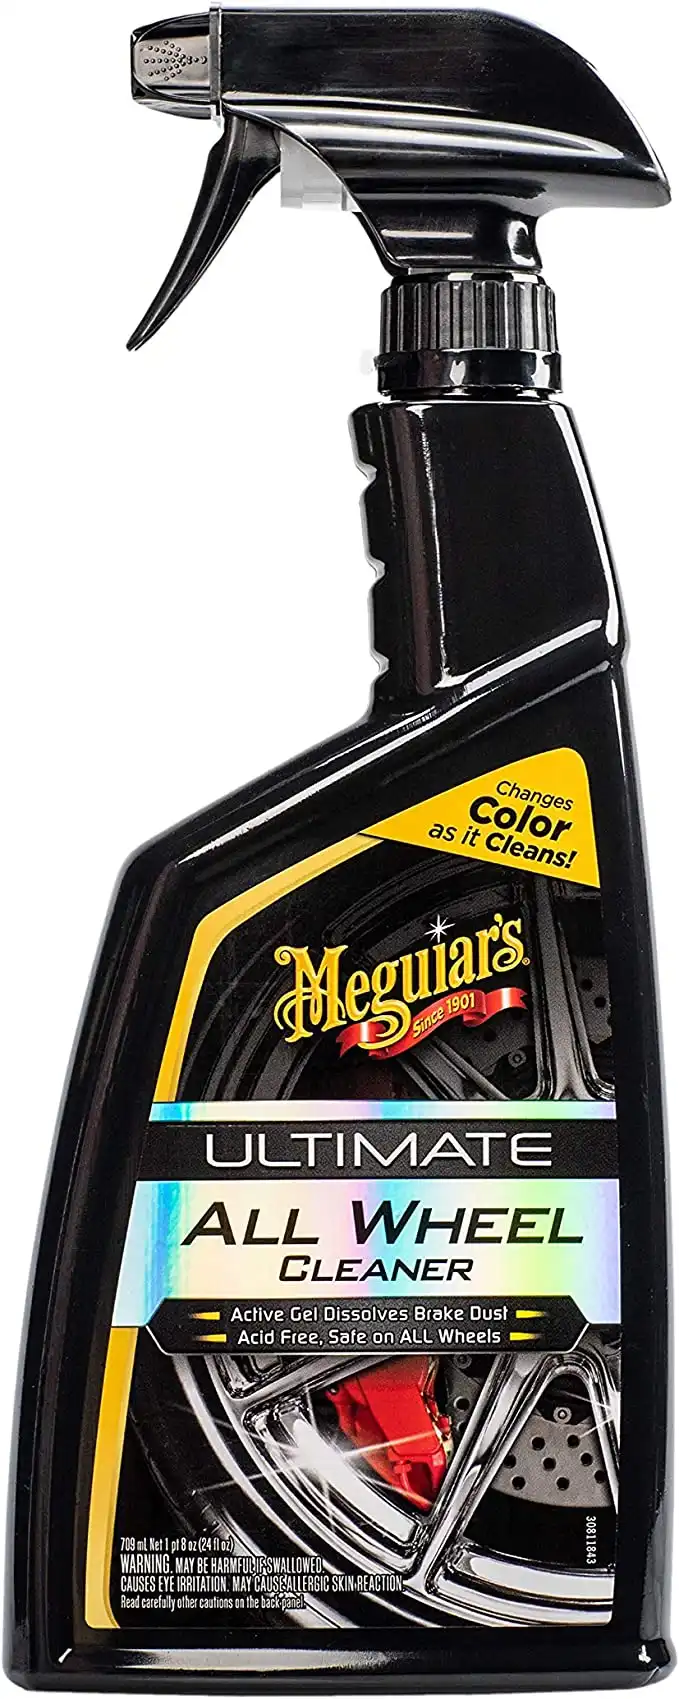 Meguiar's Ultimate All Wheel Cleaner, 24 oz